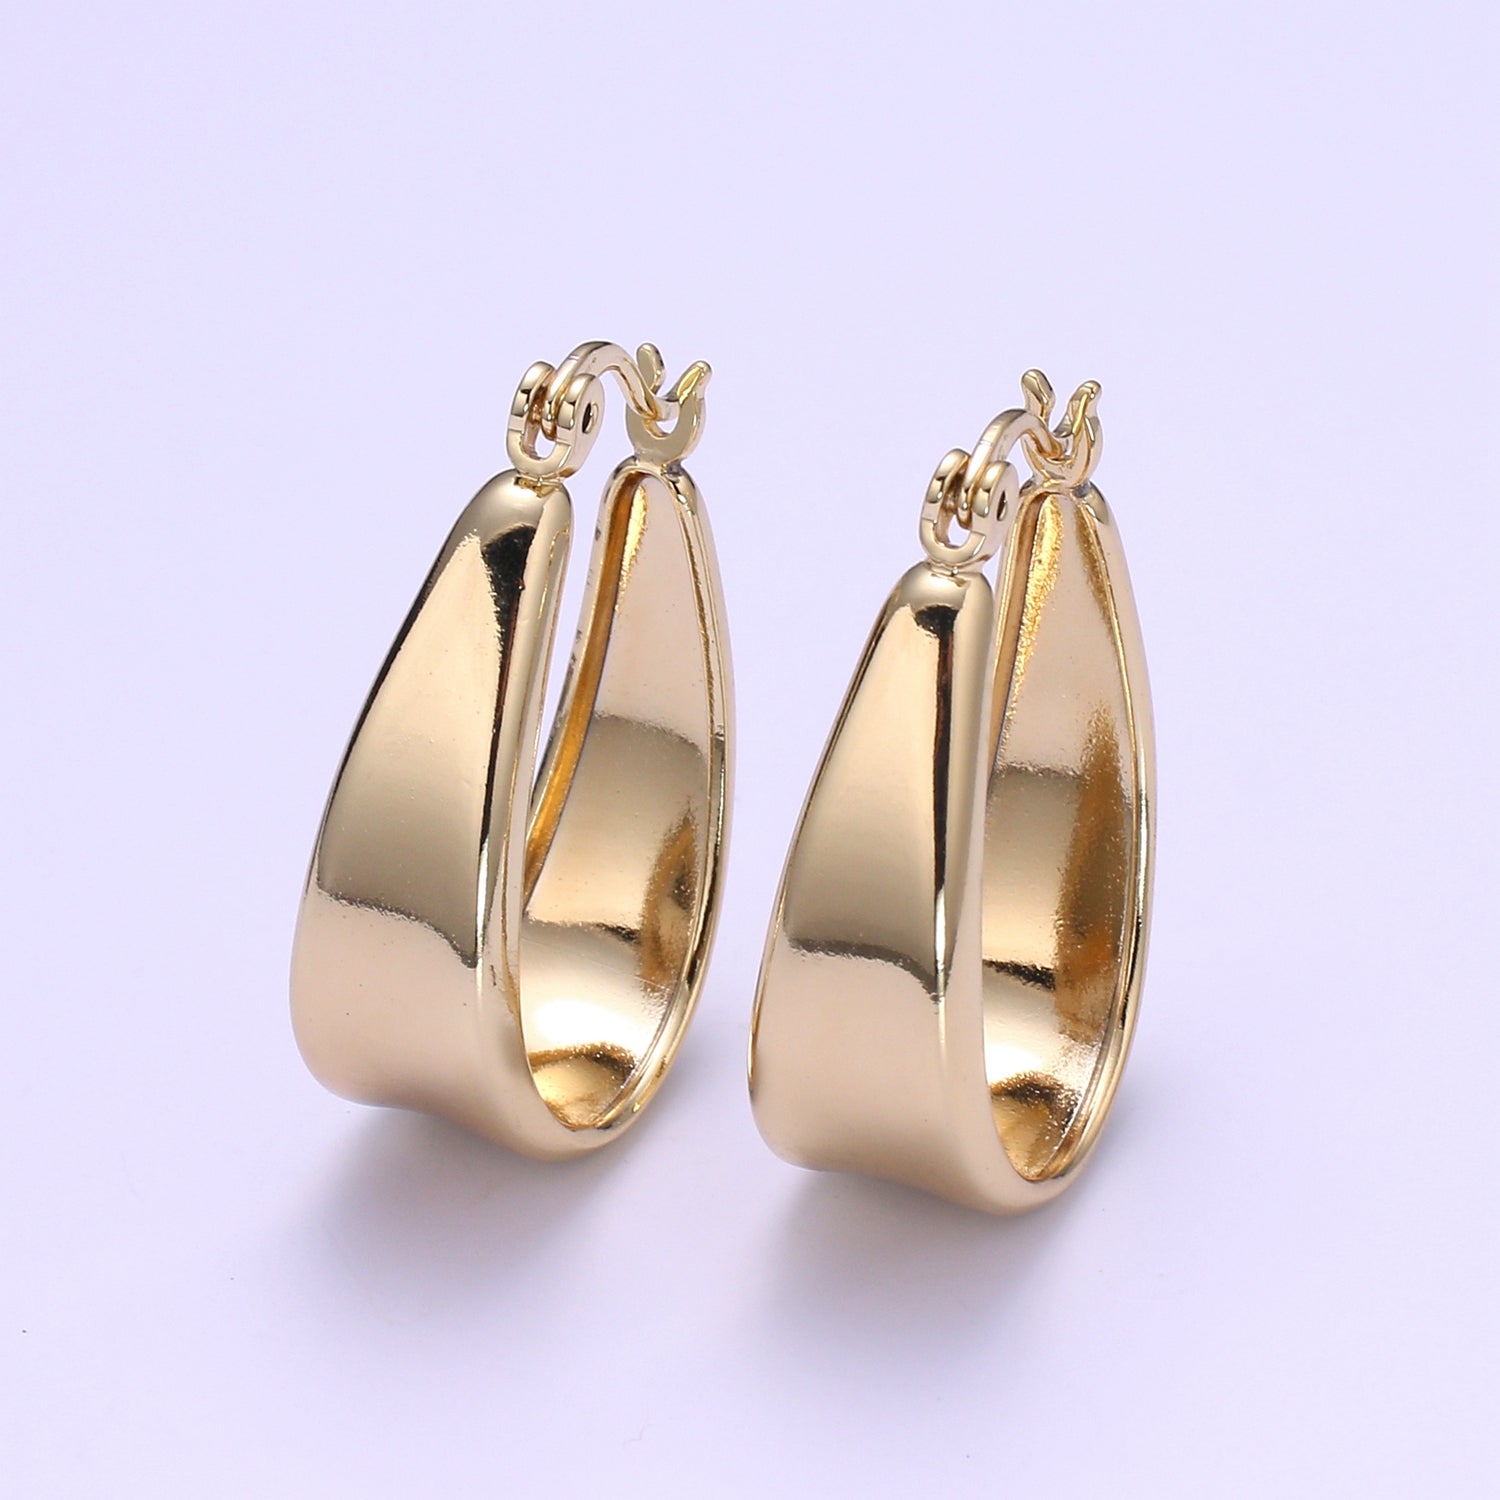 Gold chunky hoop earring 14k Gold Filled Earring hypoallergenic / gold hoop earrings / Bold hoops / thick hoop earrings for gift - DLUXCA